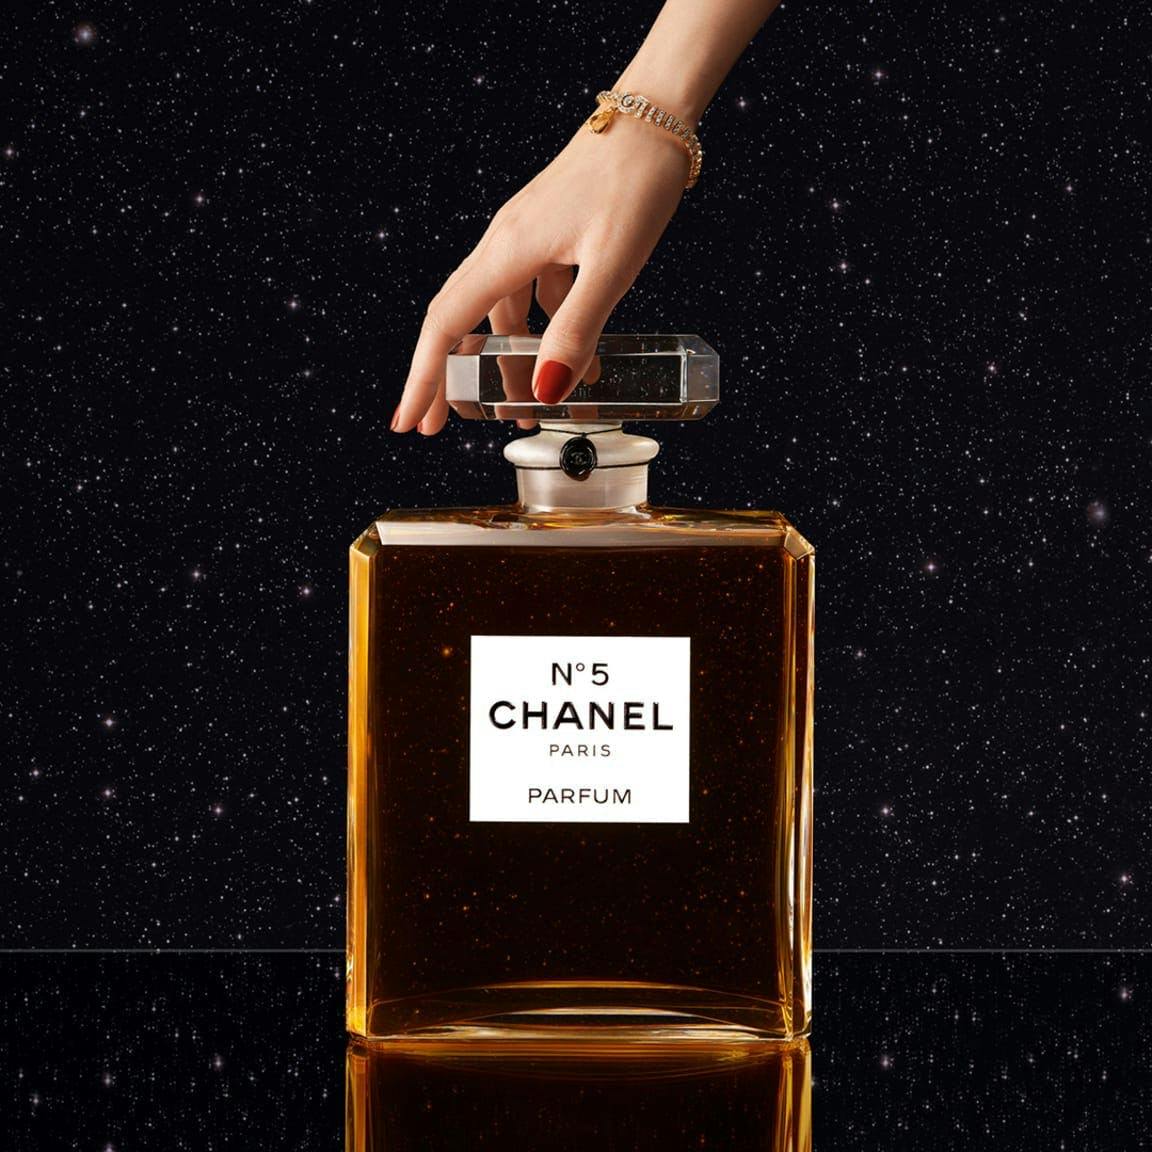 Chanel N'5 perfume bottle, Chanel No. 5 Coco Mademoiselle Perfume